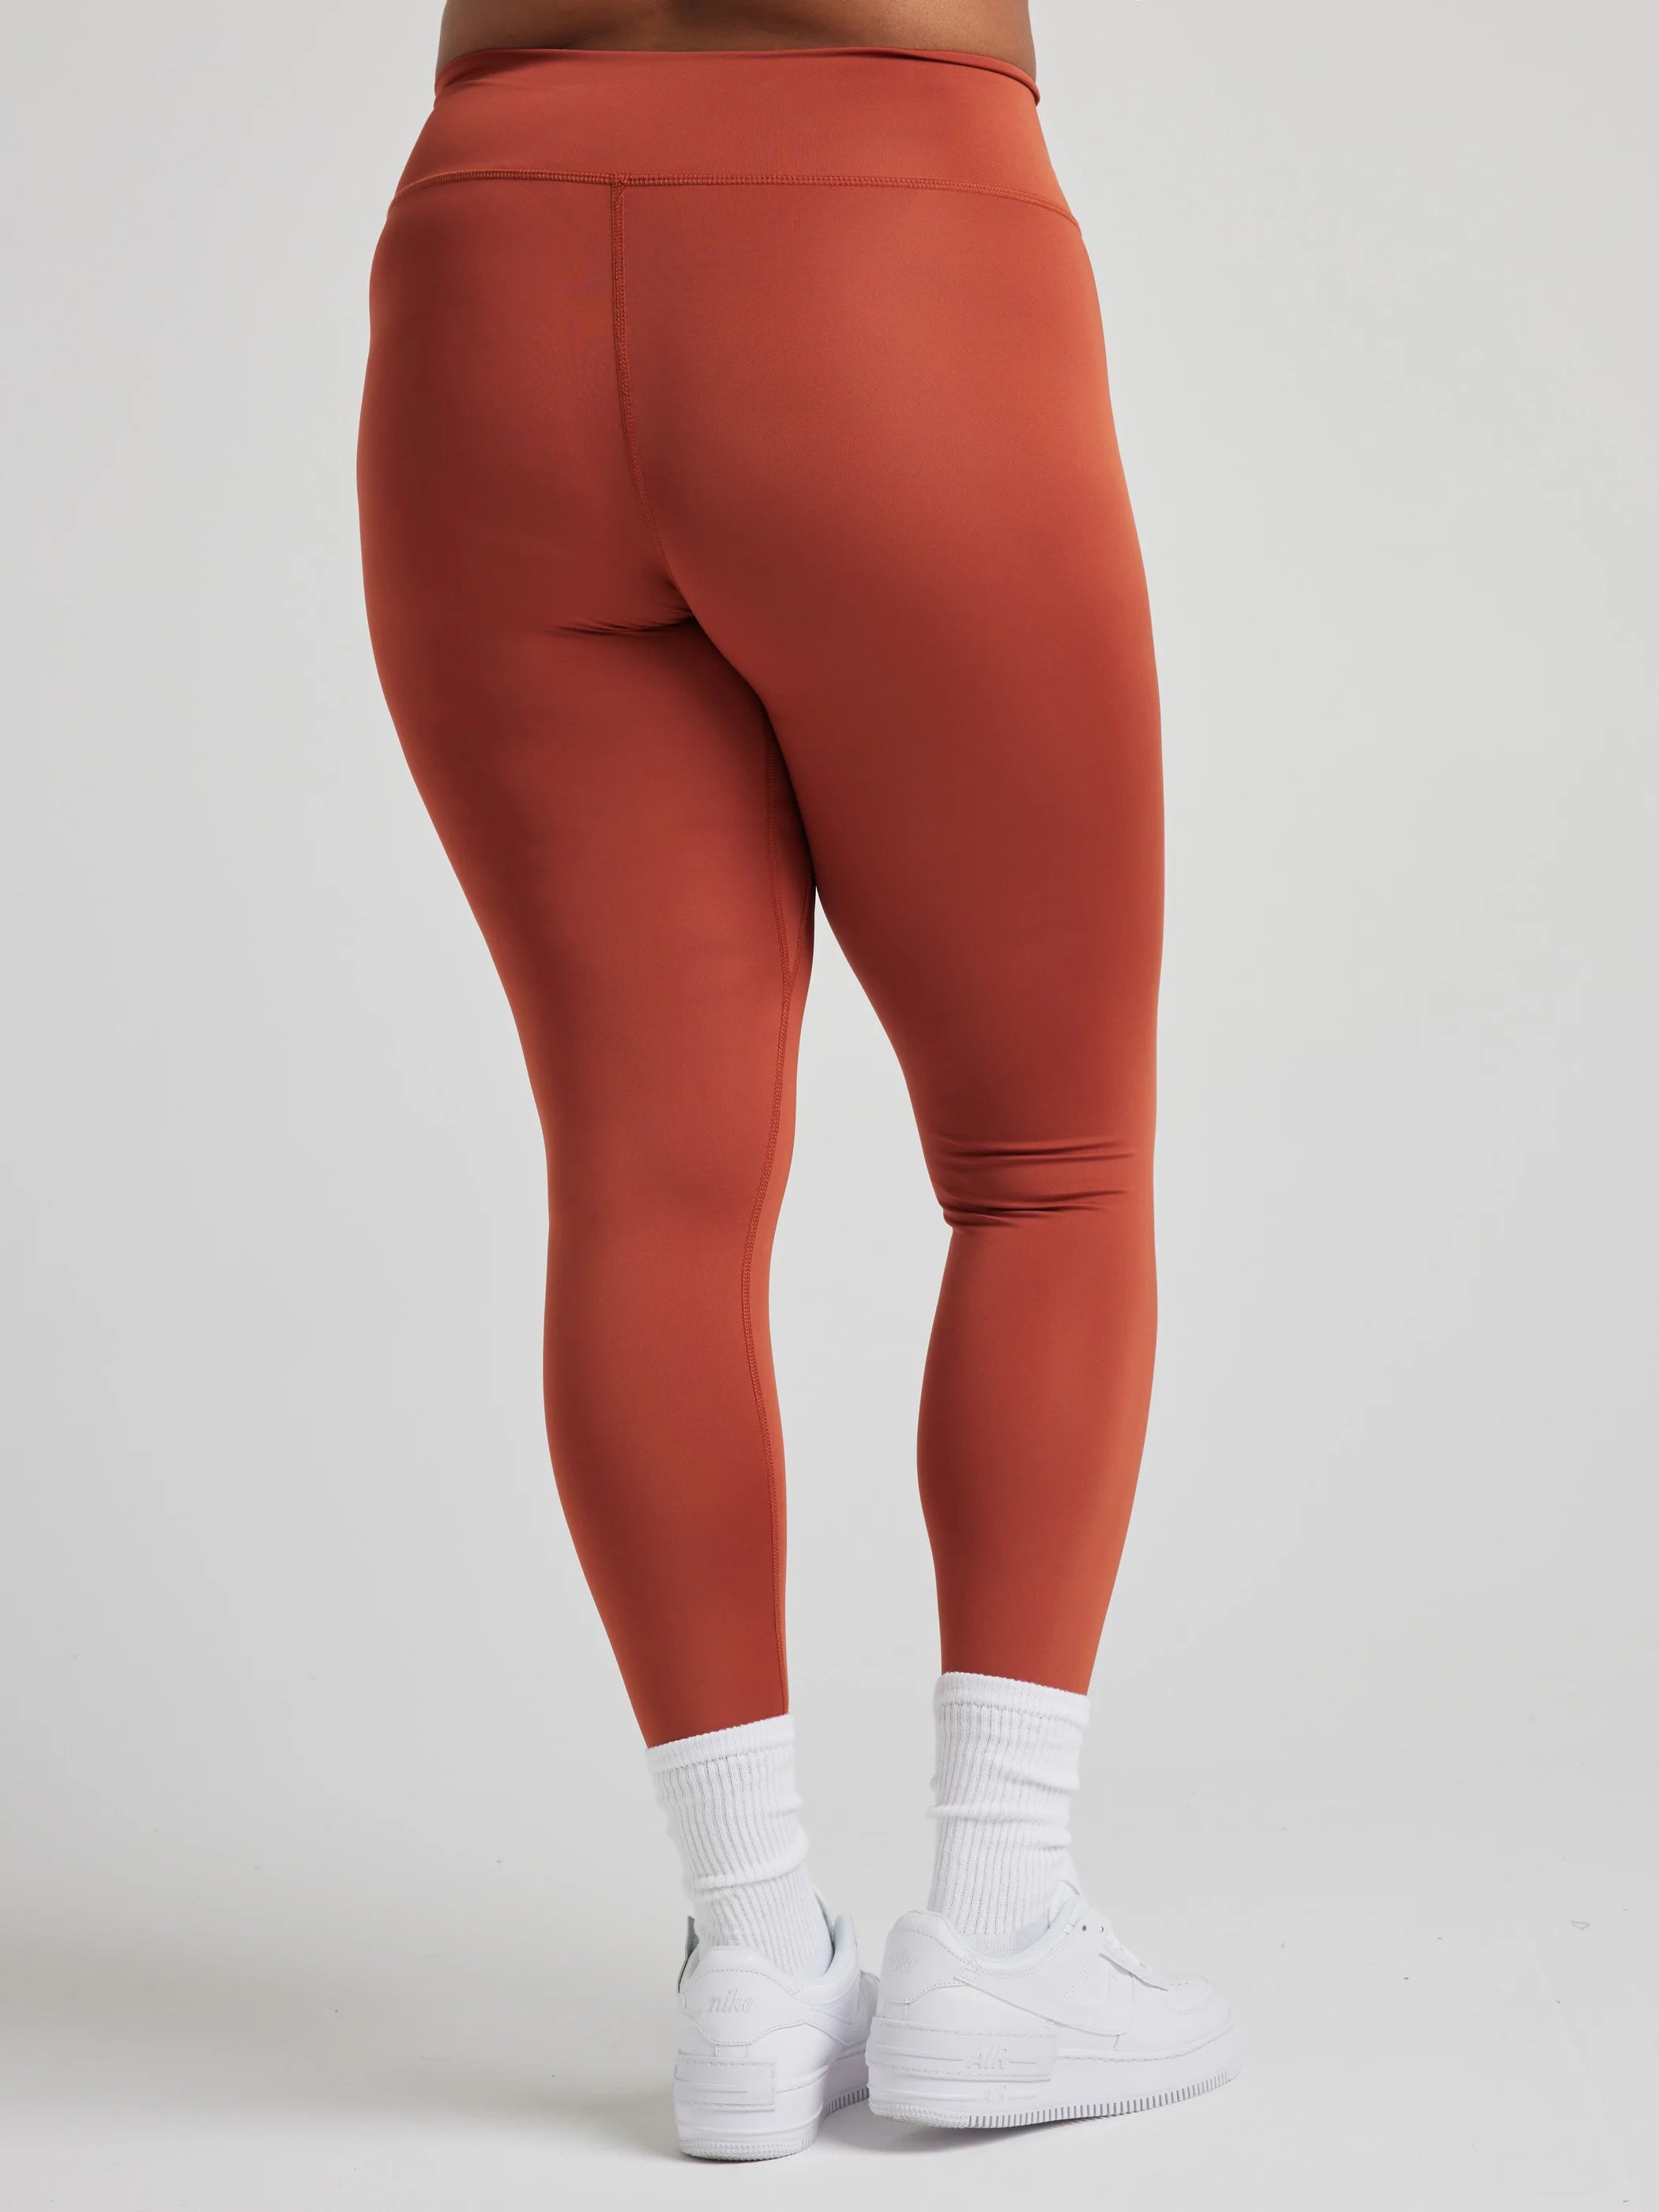 Wholesale Plus Size Corset High Waisted Workout Leggings Women